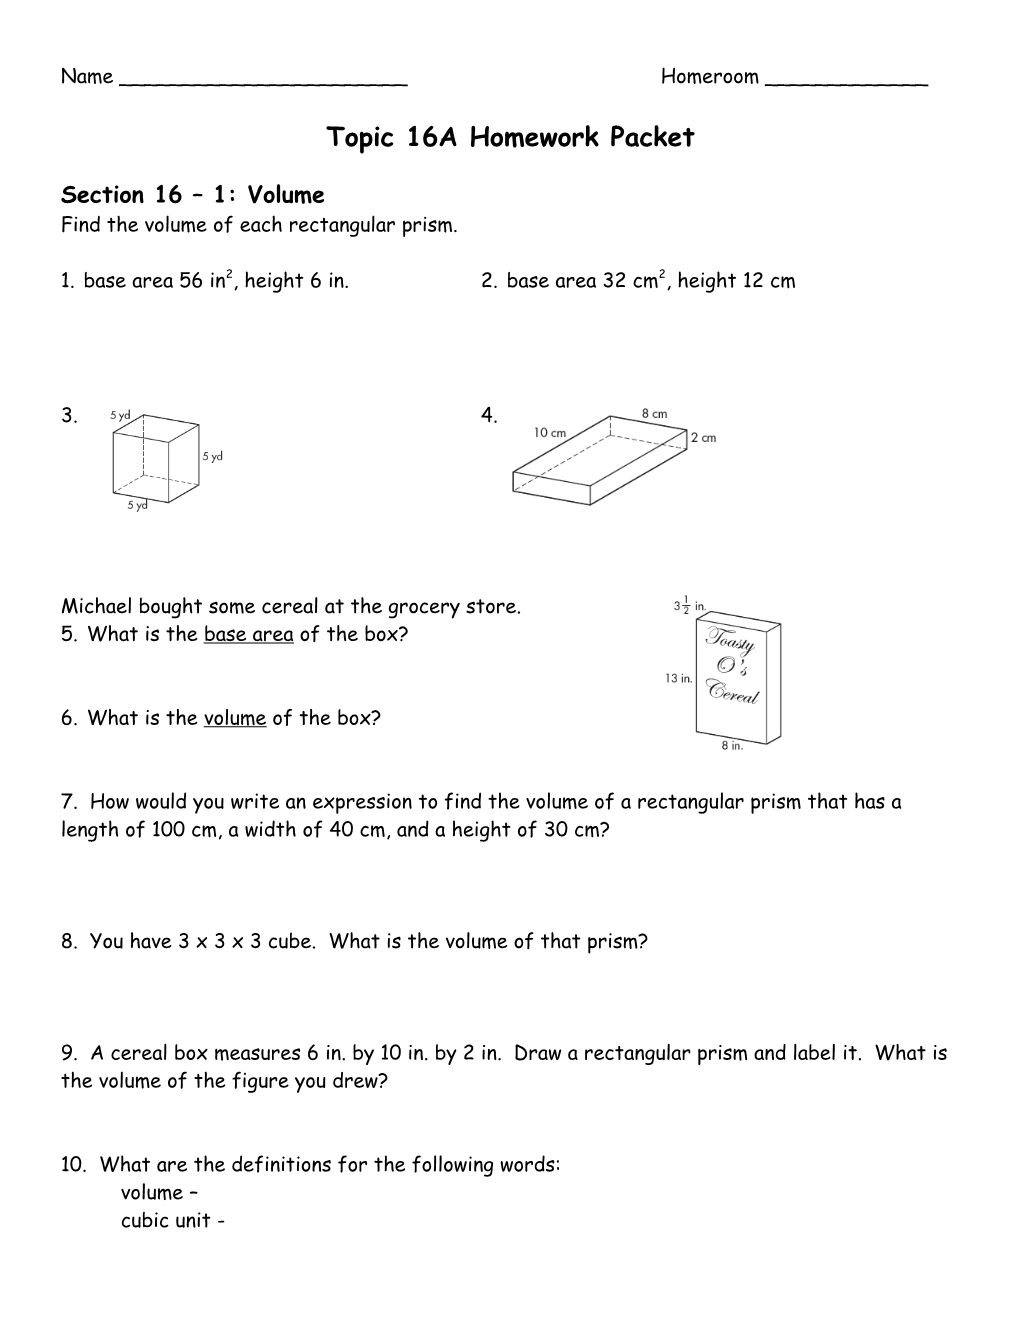 Topic 16A Homework Packet